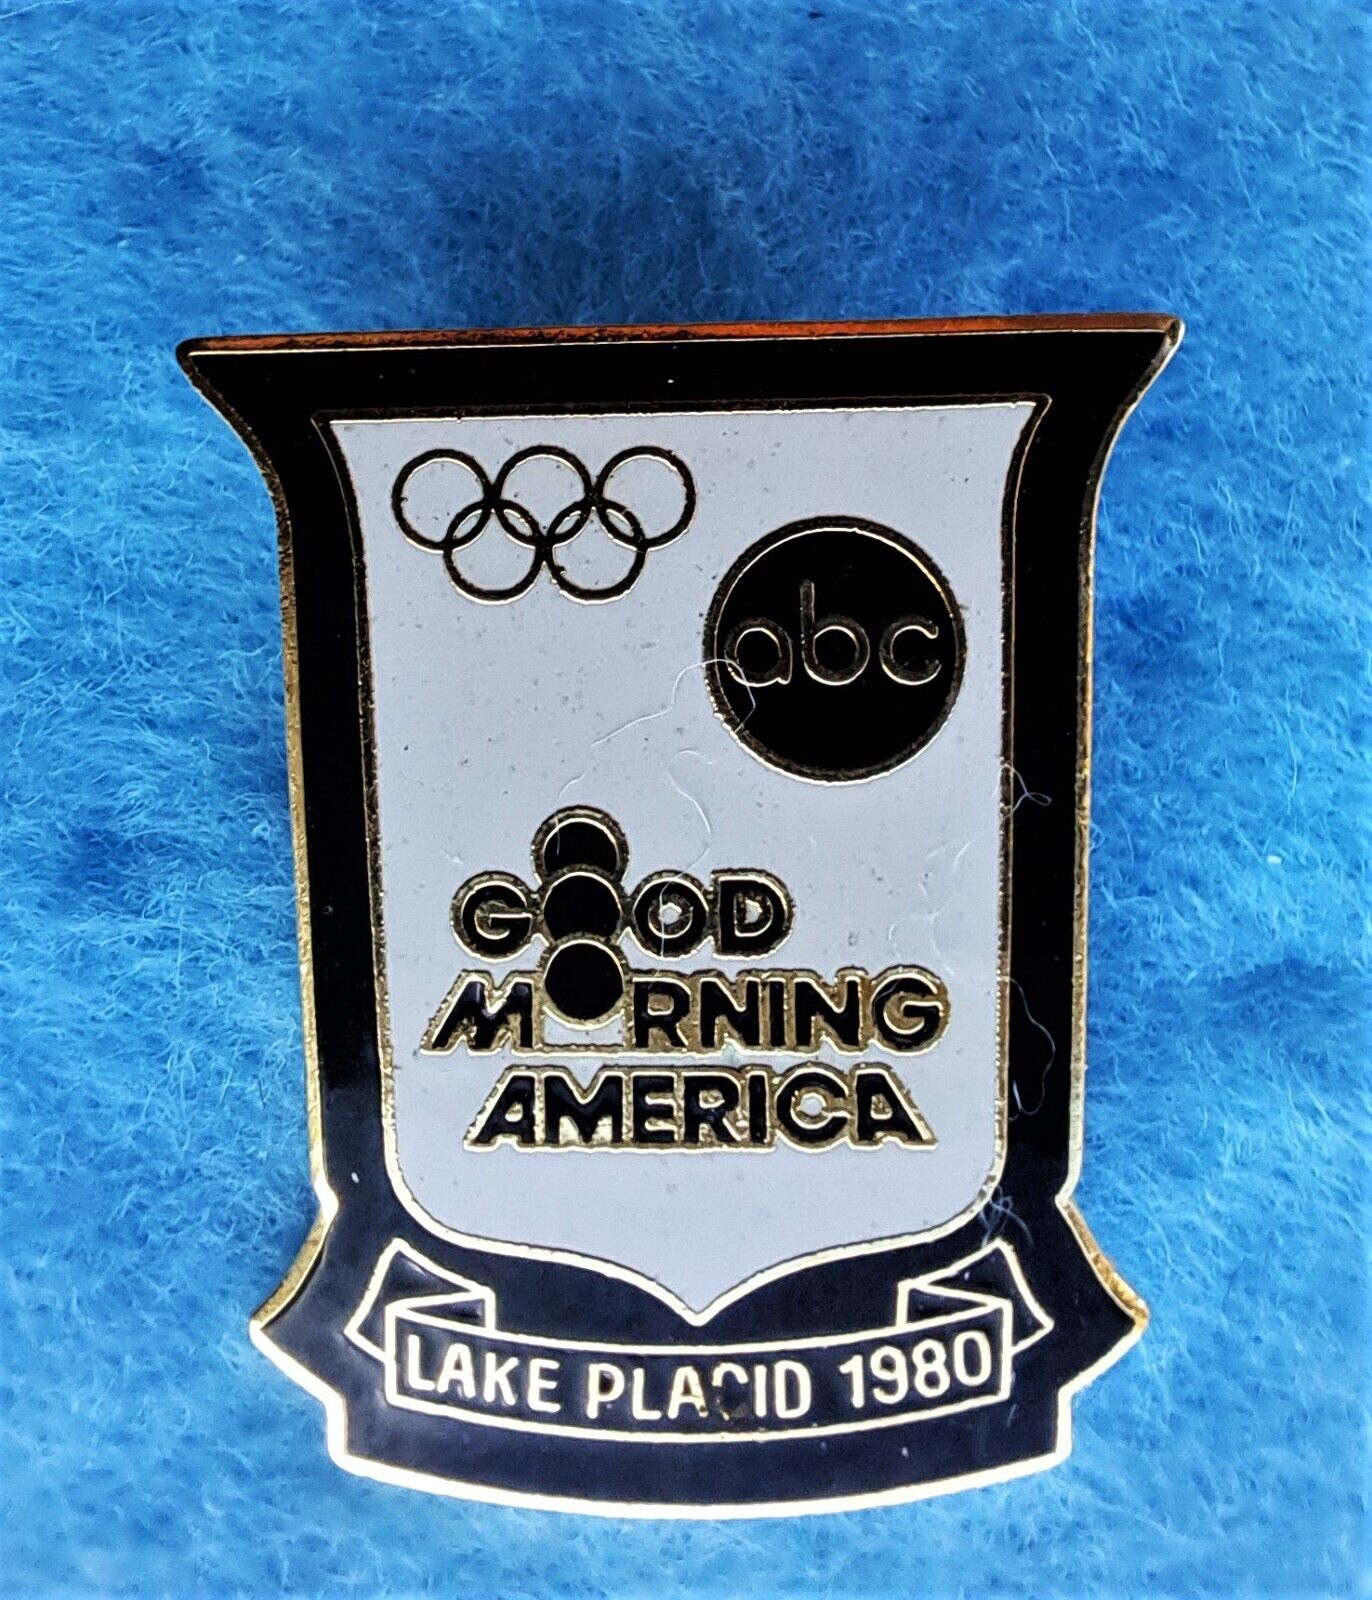 1980 Lake Placid Olympic Games -   Good Morning America Pin